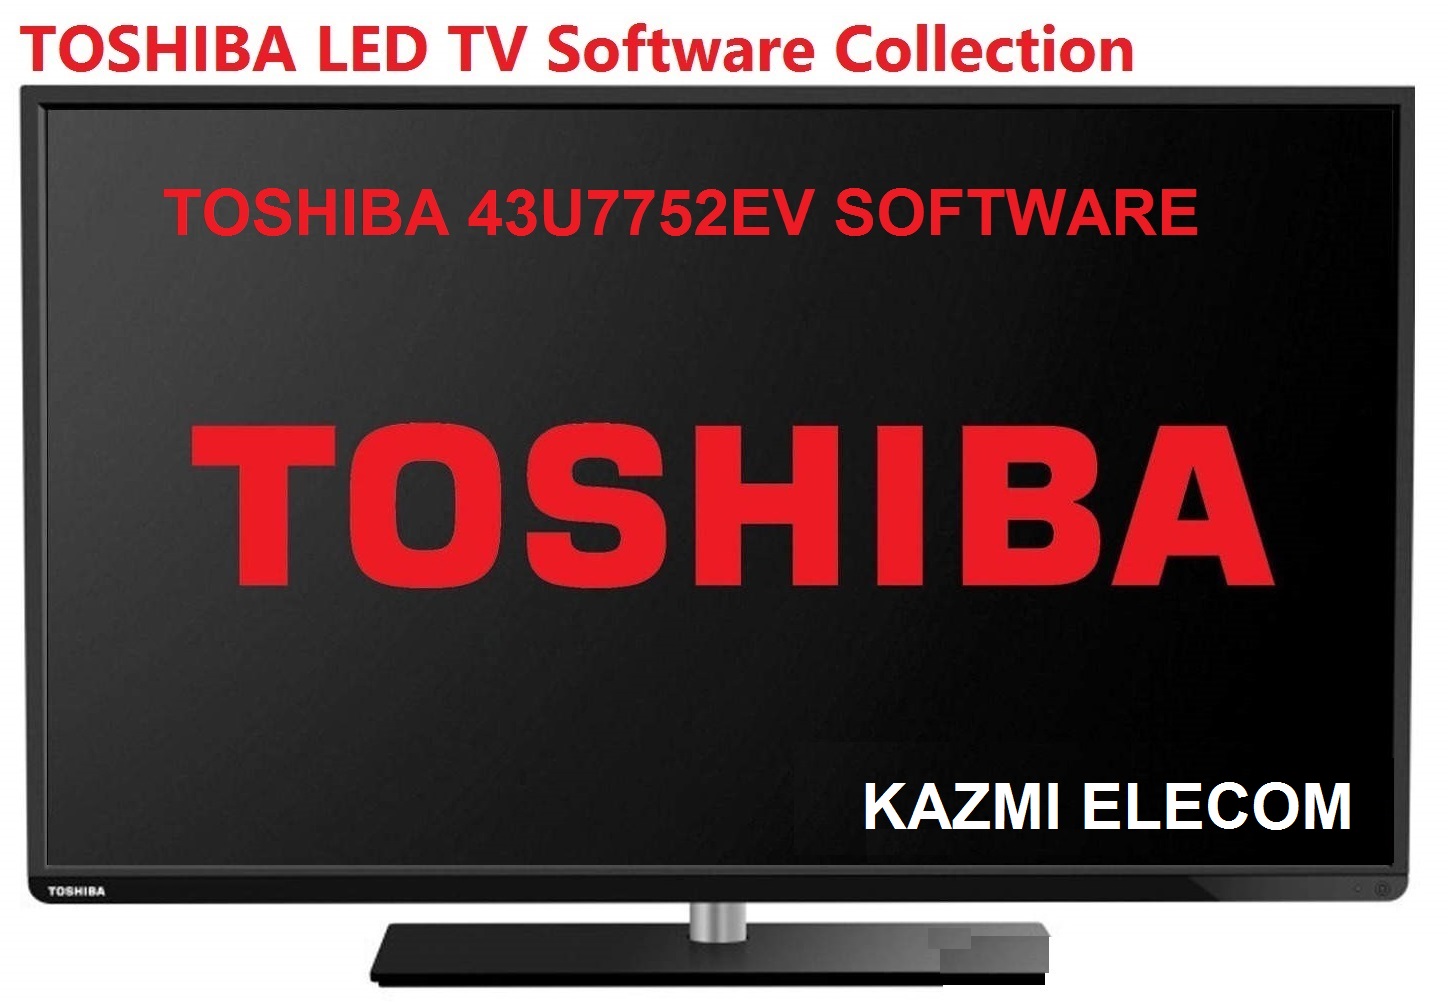 Toshiba 43U7752Ev